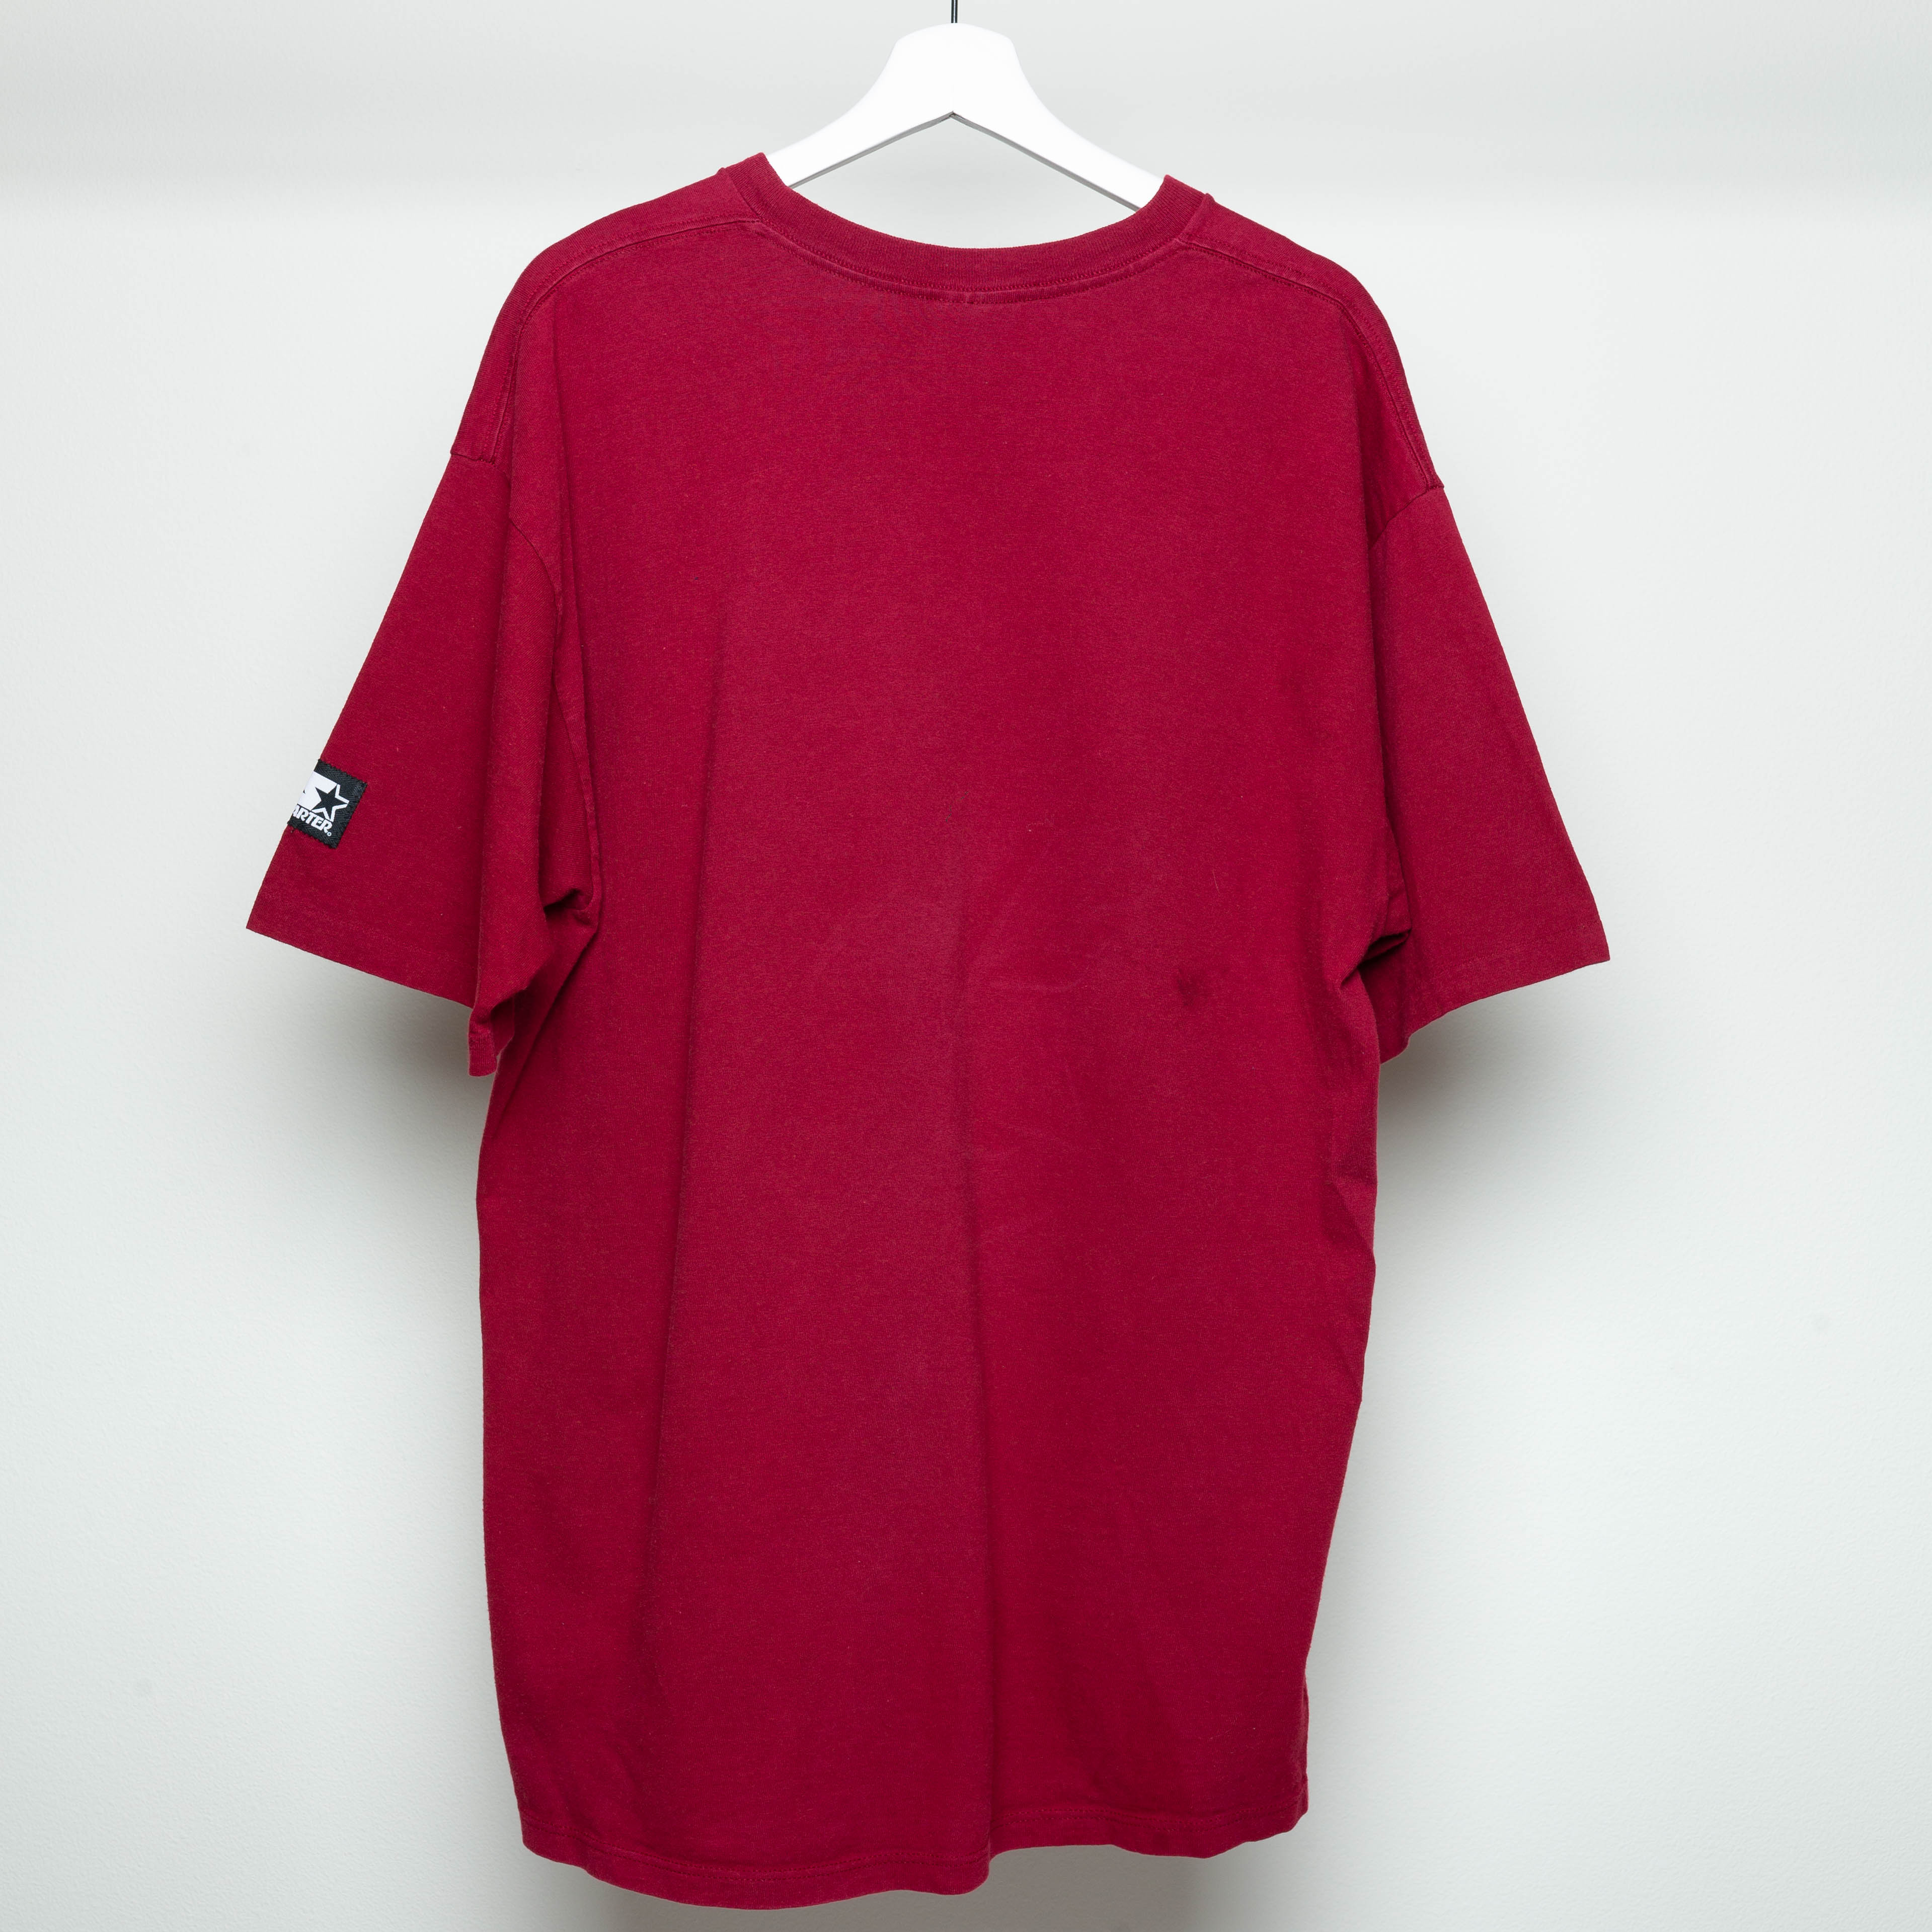 1993 Washington Redskins Starter T-Shirt Size XL